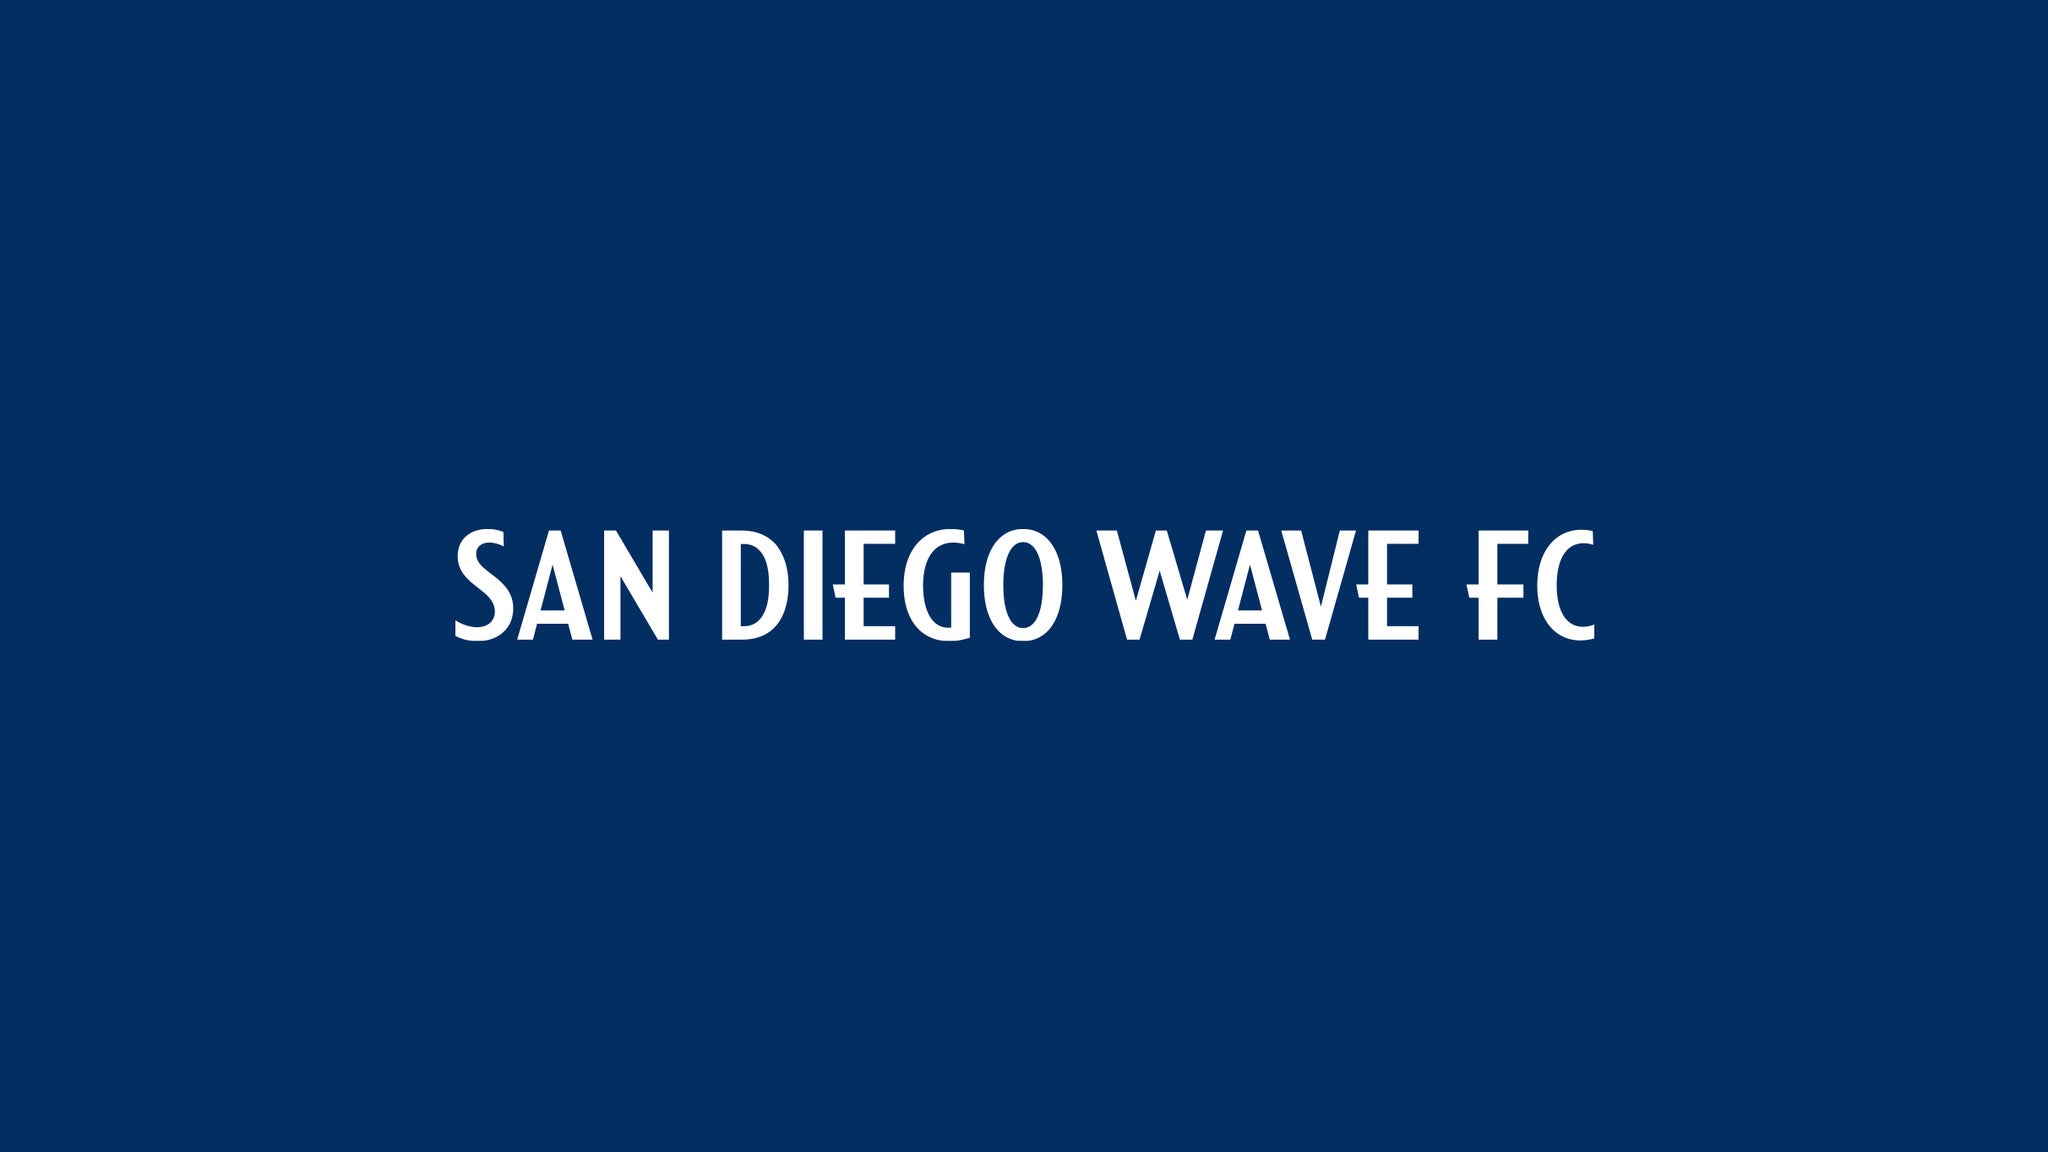 San Diego Wave FC vs. Orlando Pride at USD Torero Stadium